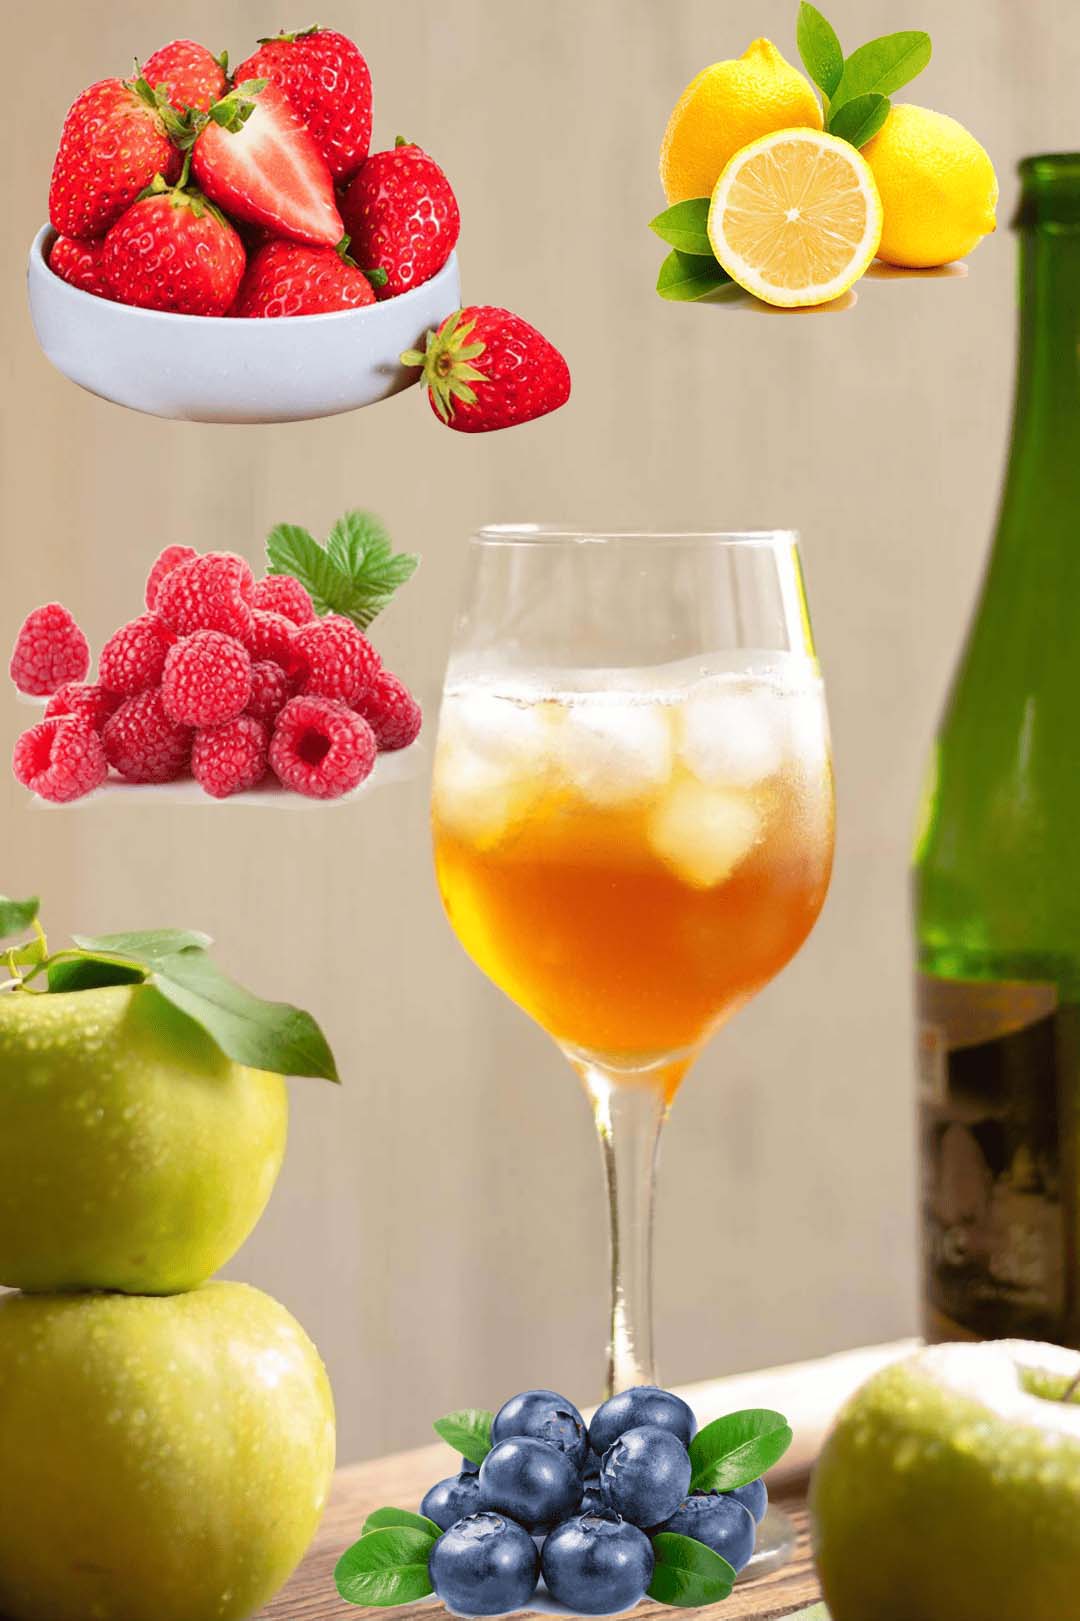 Apple Cider Vinegar With Berries and Lemon